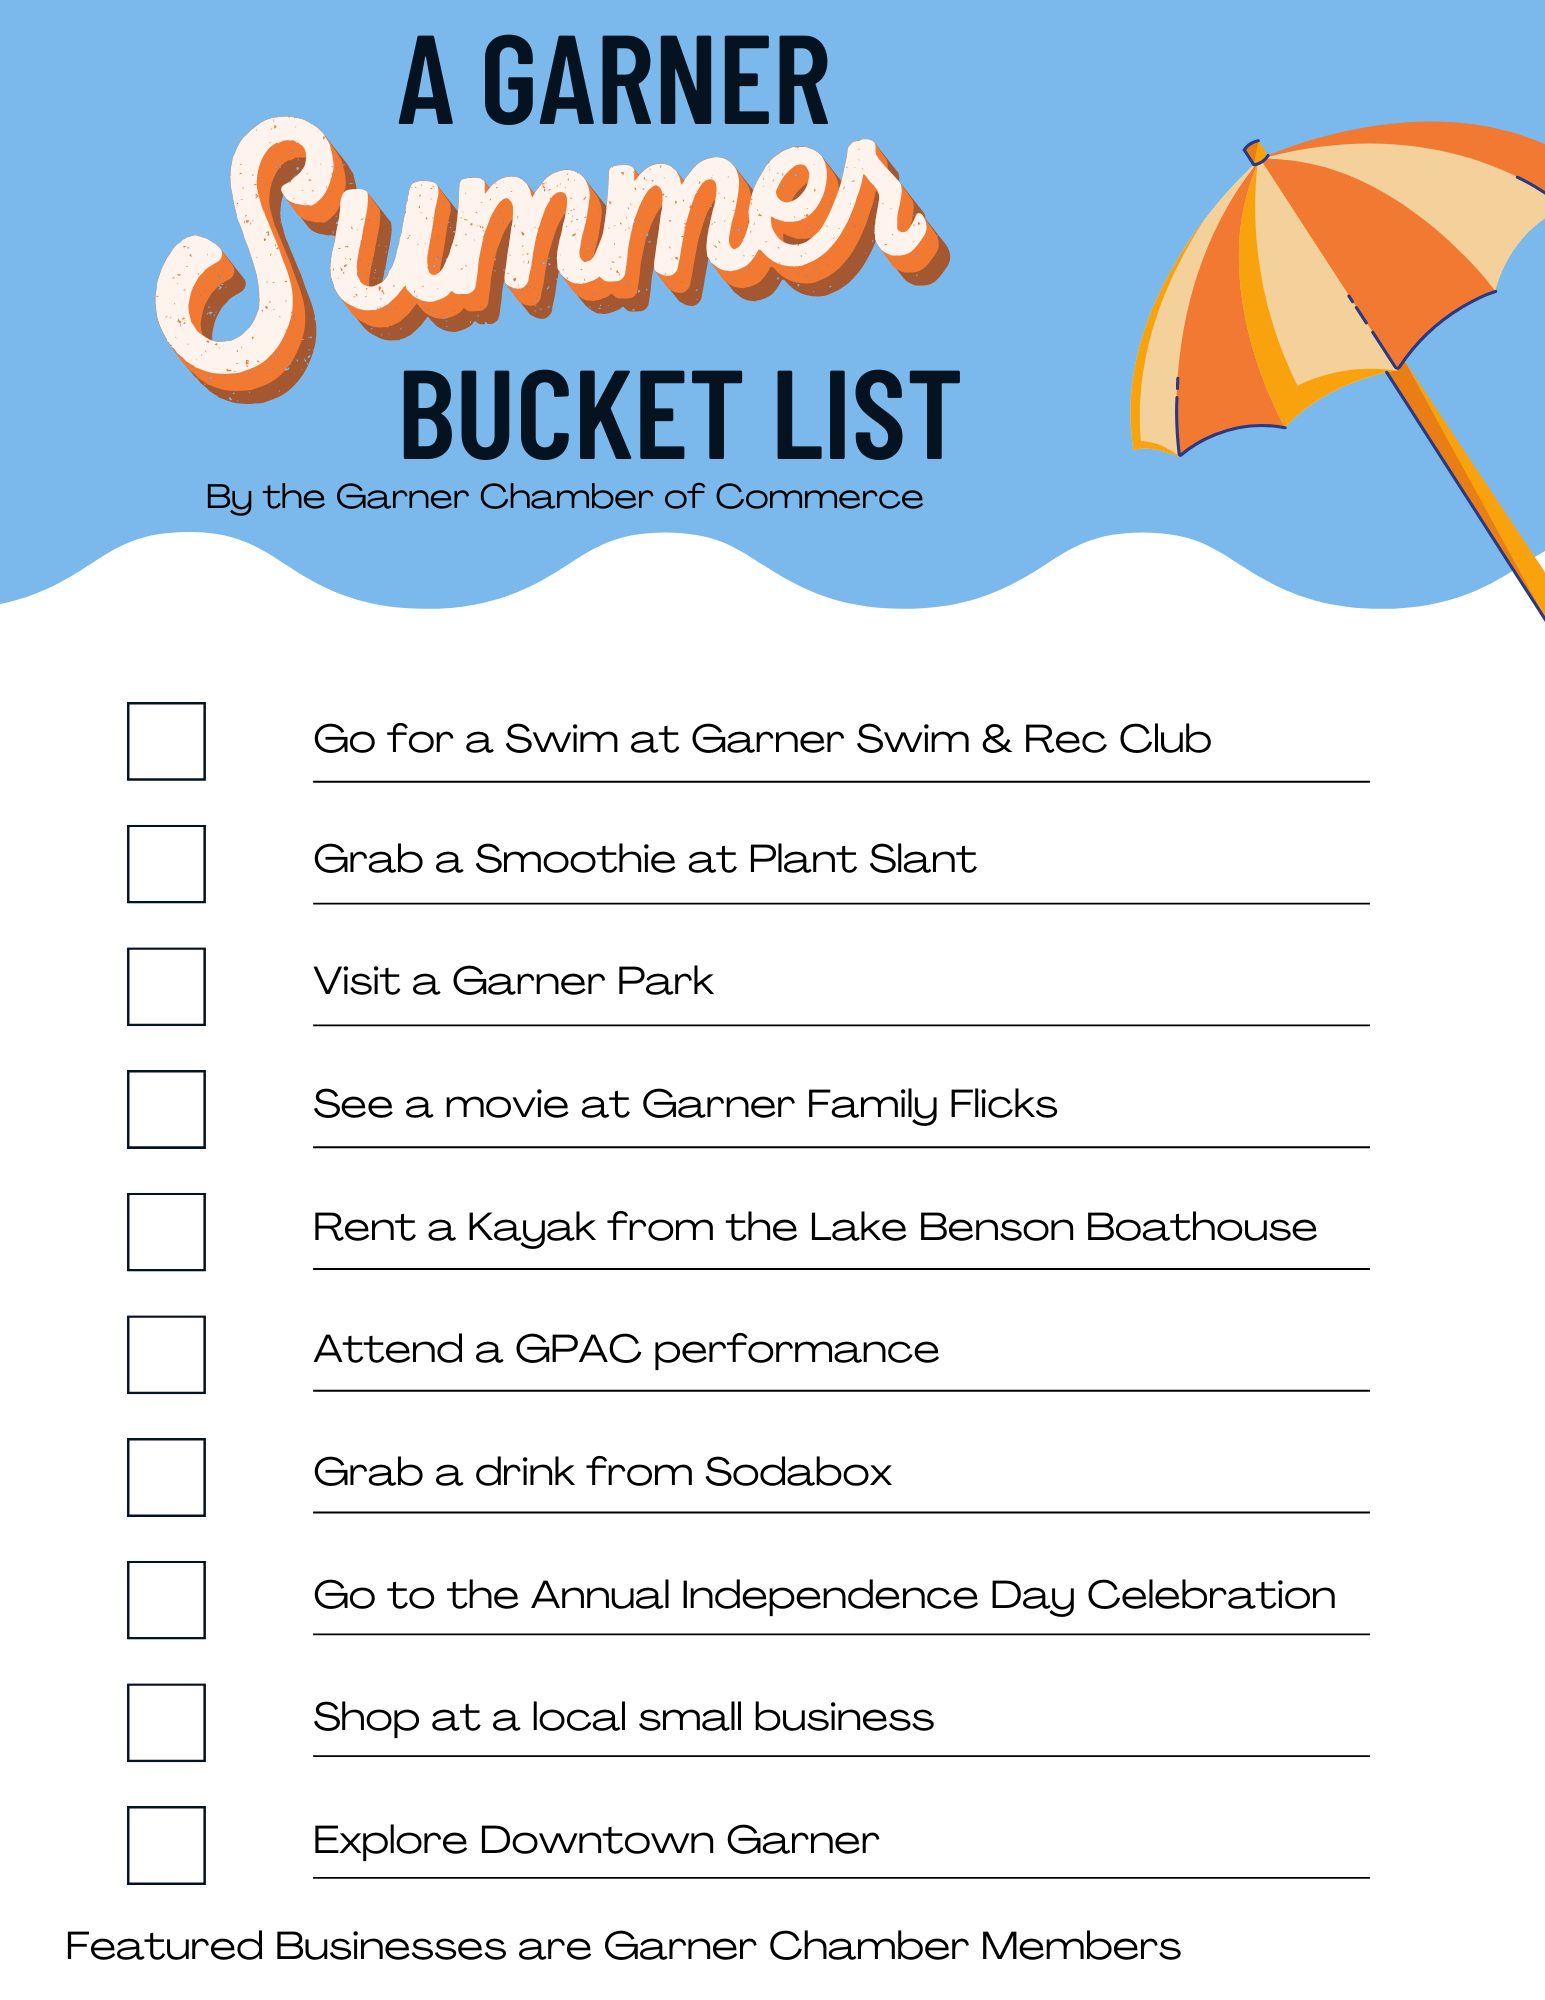 A Garner Summer Bucket List